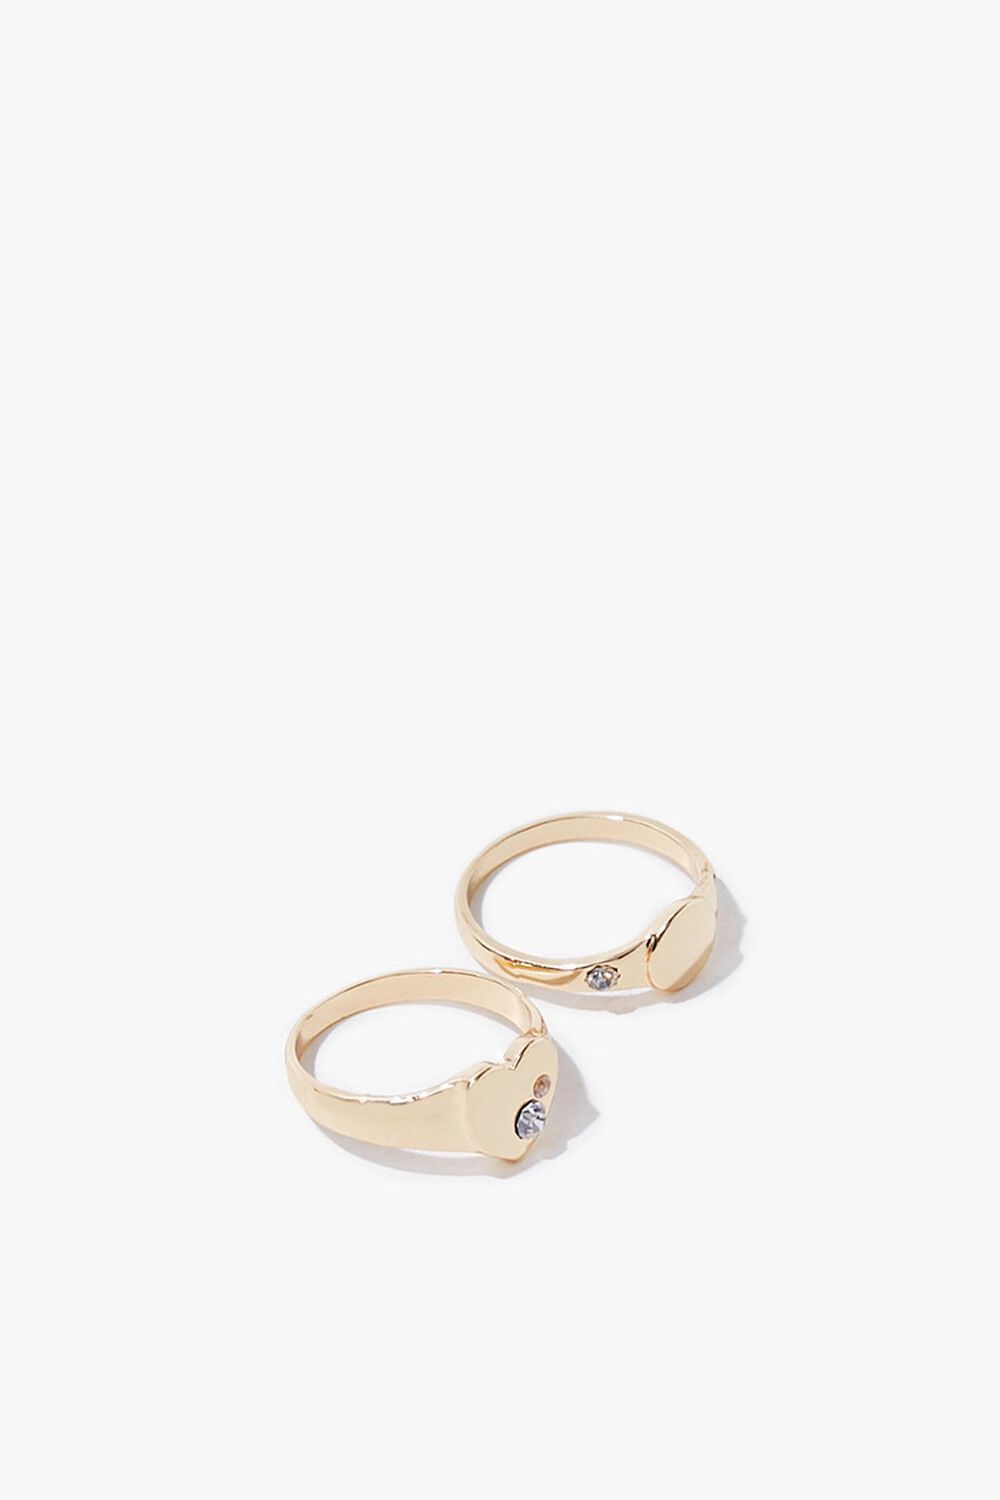 GOLD Upcycled Heart Ring Set, image 2